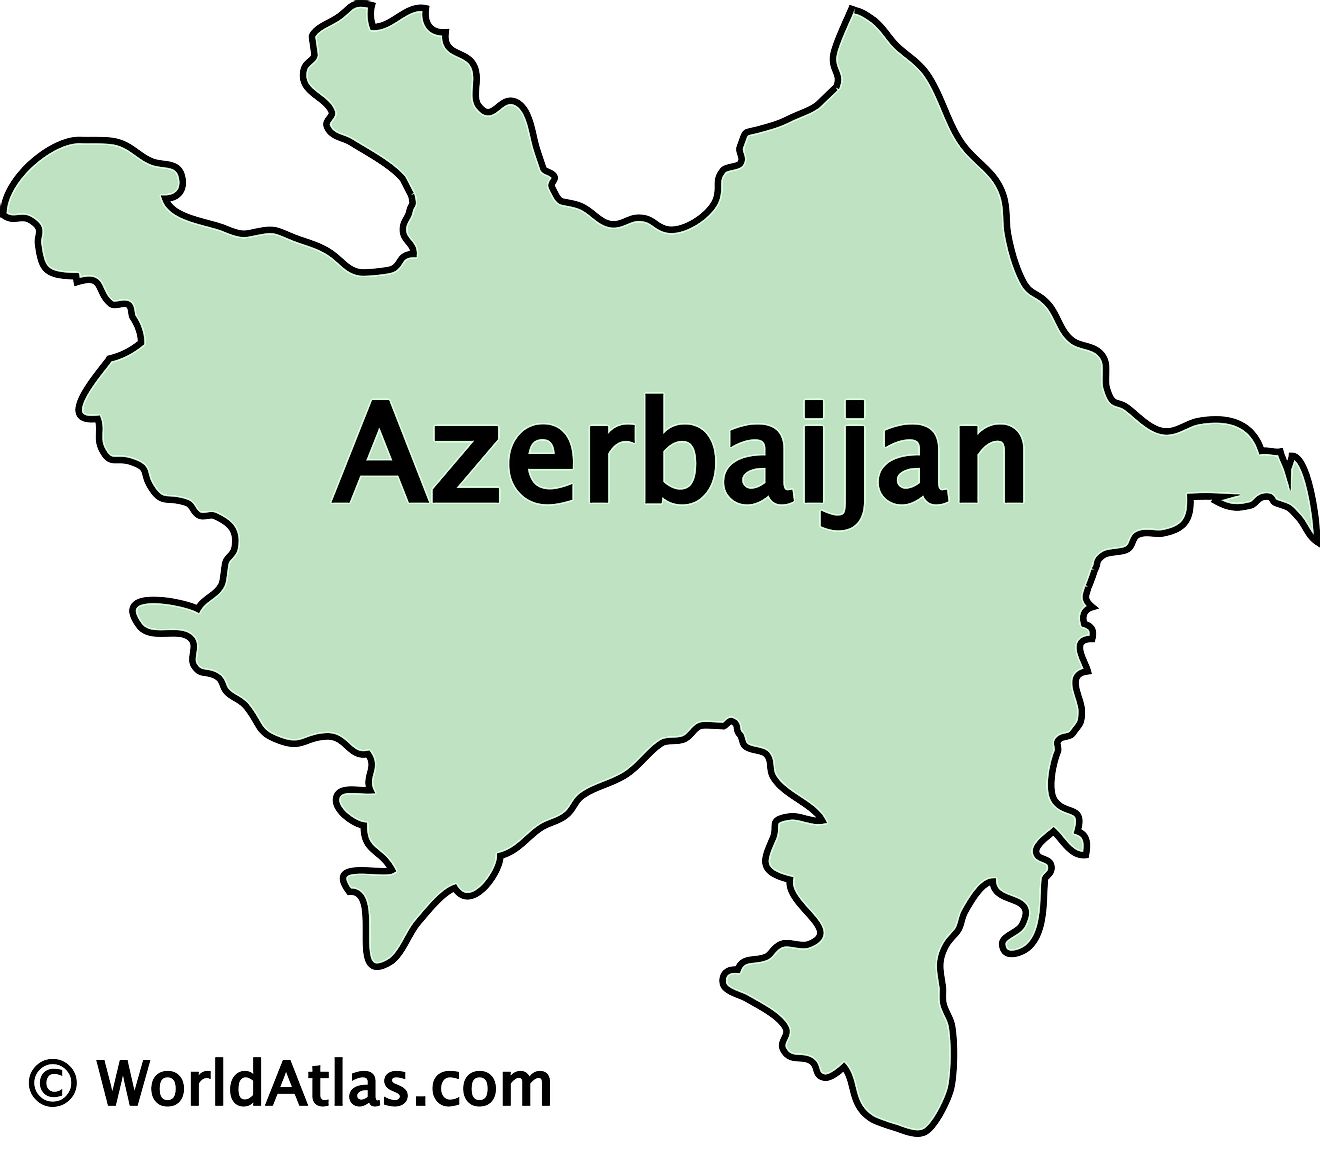 Outline Map of Azerbaijan